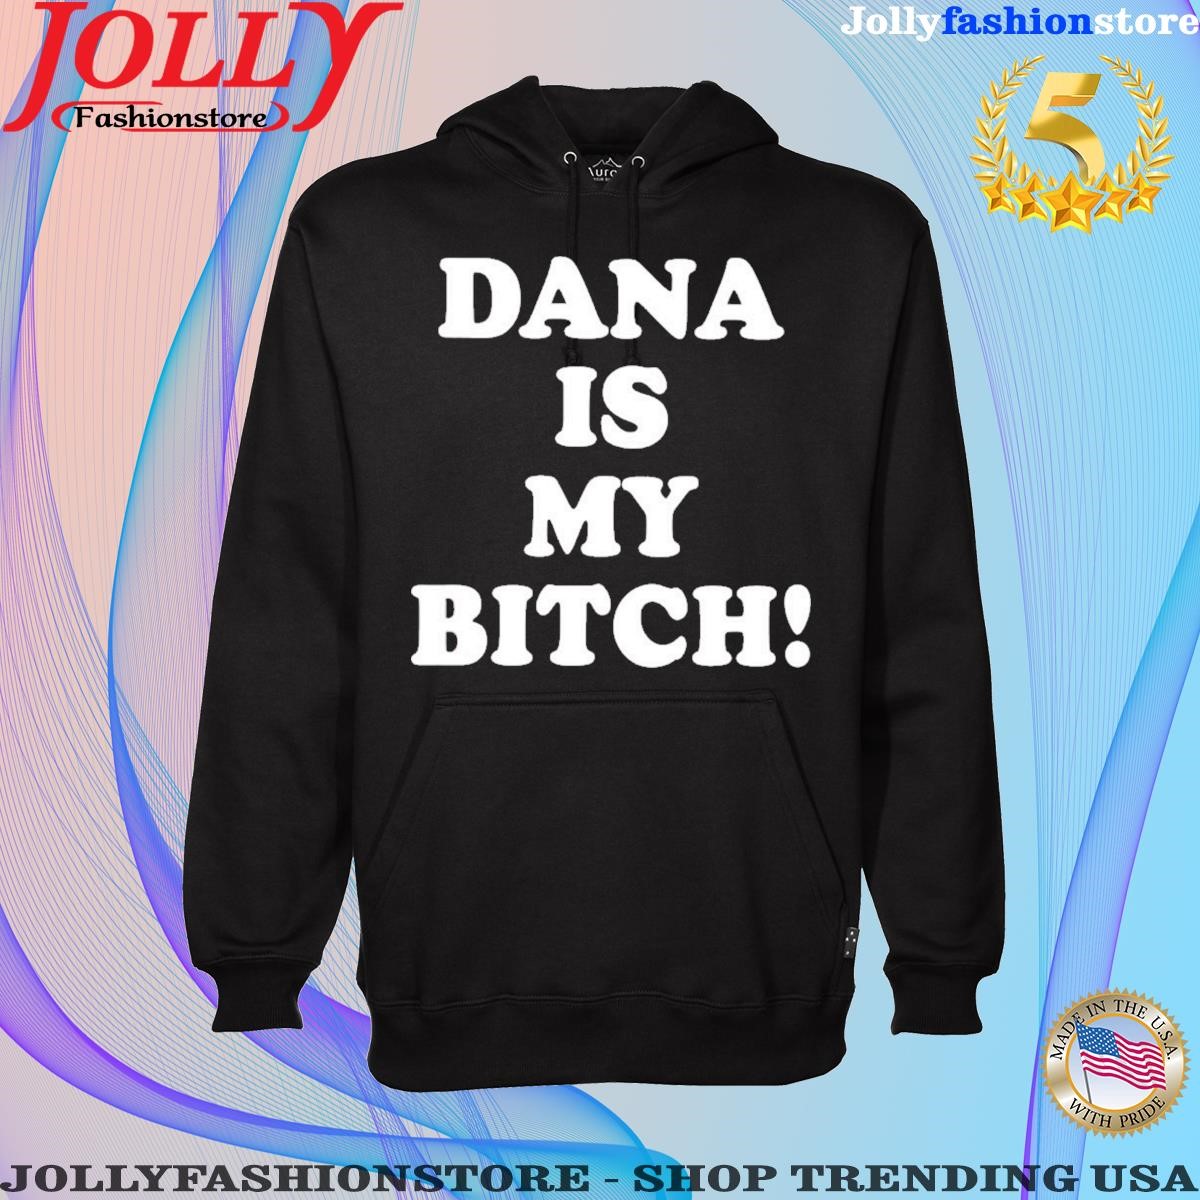 Dana is my bitch Hoodie shirt.png